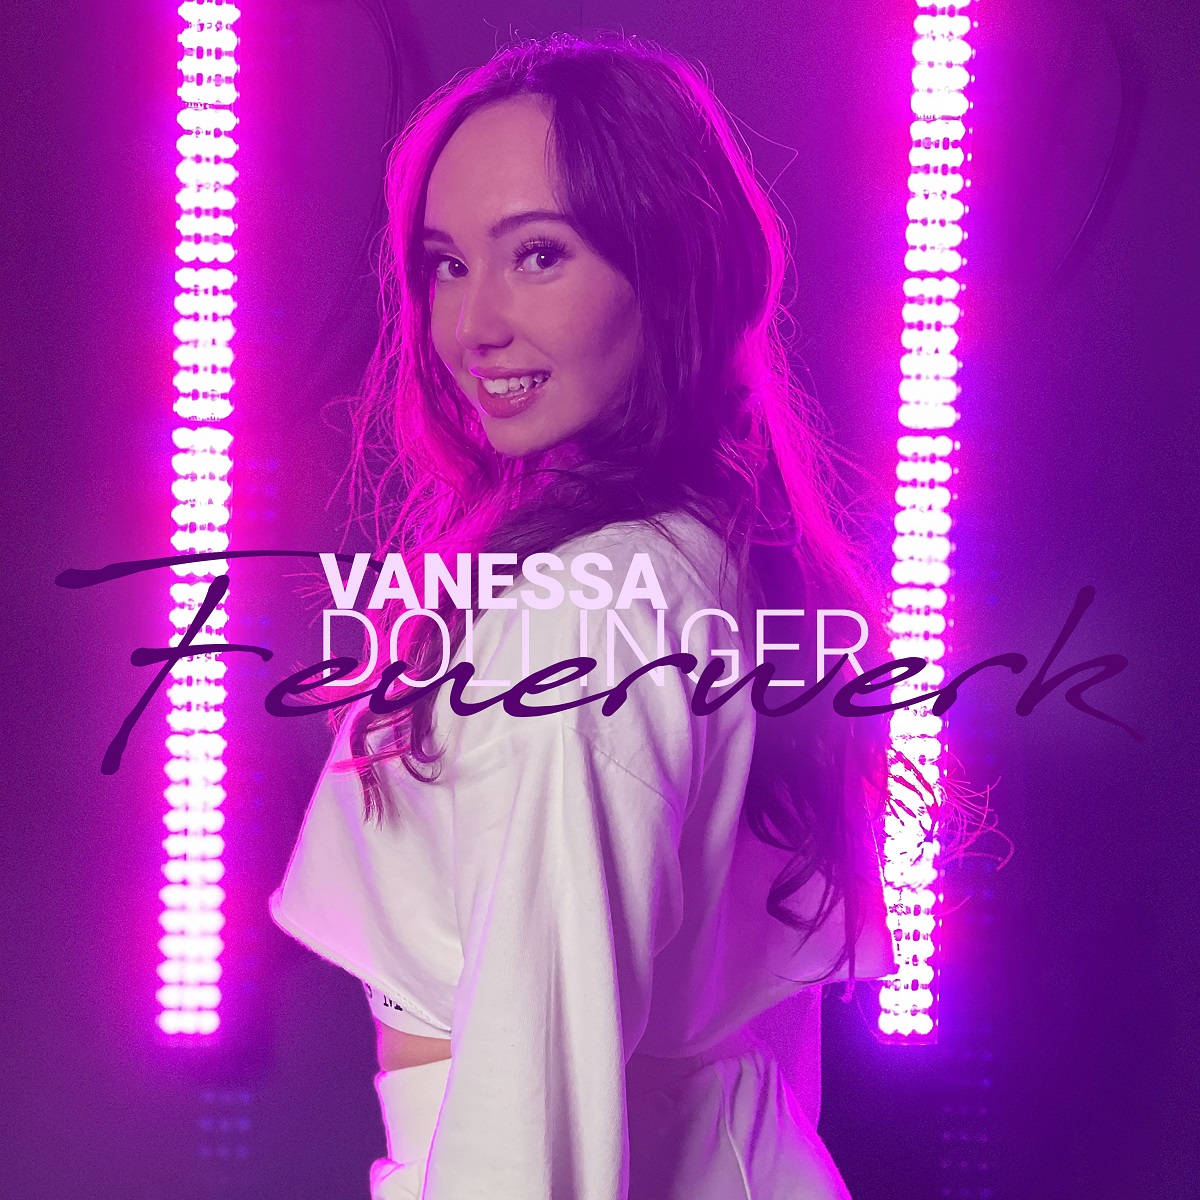 Vanessa Dollinger - Feuerwerk - cover1.jpg